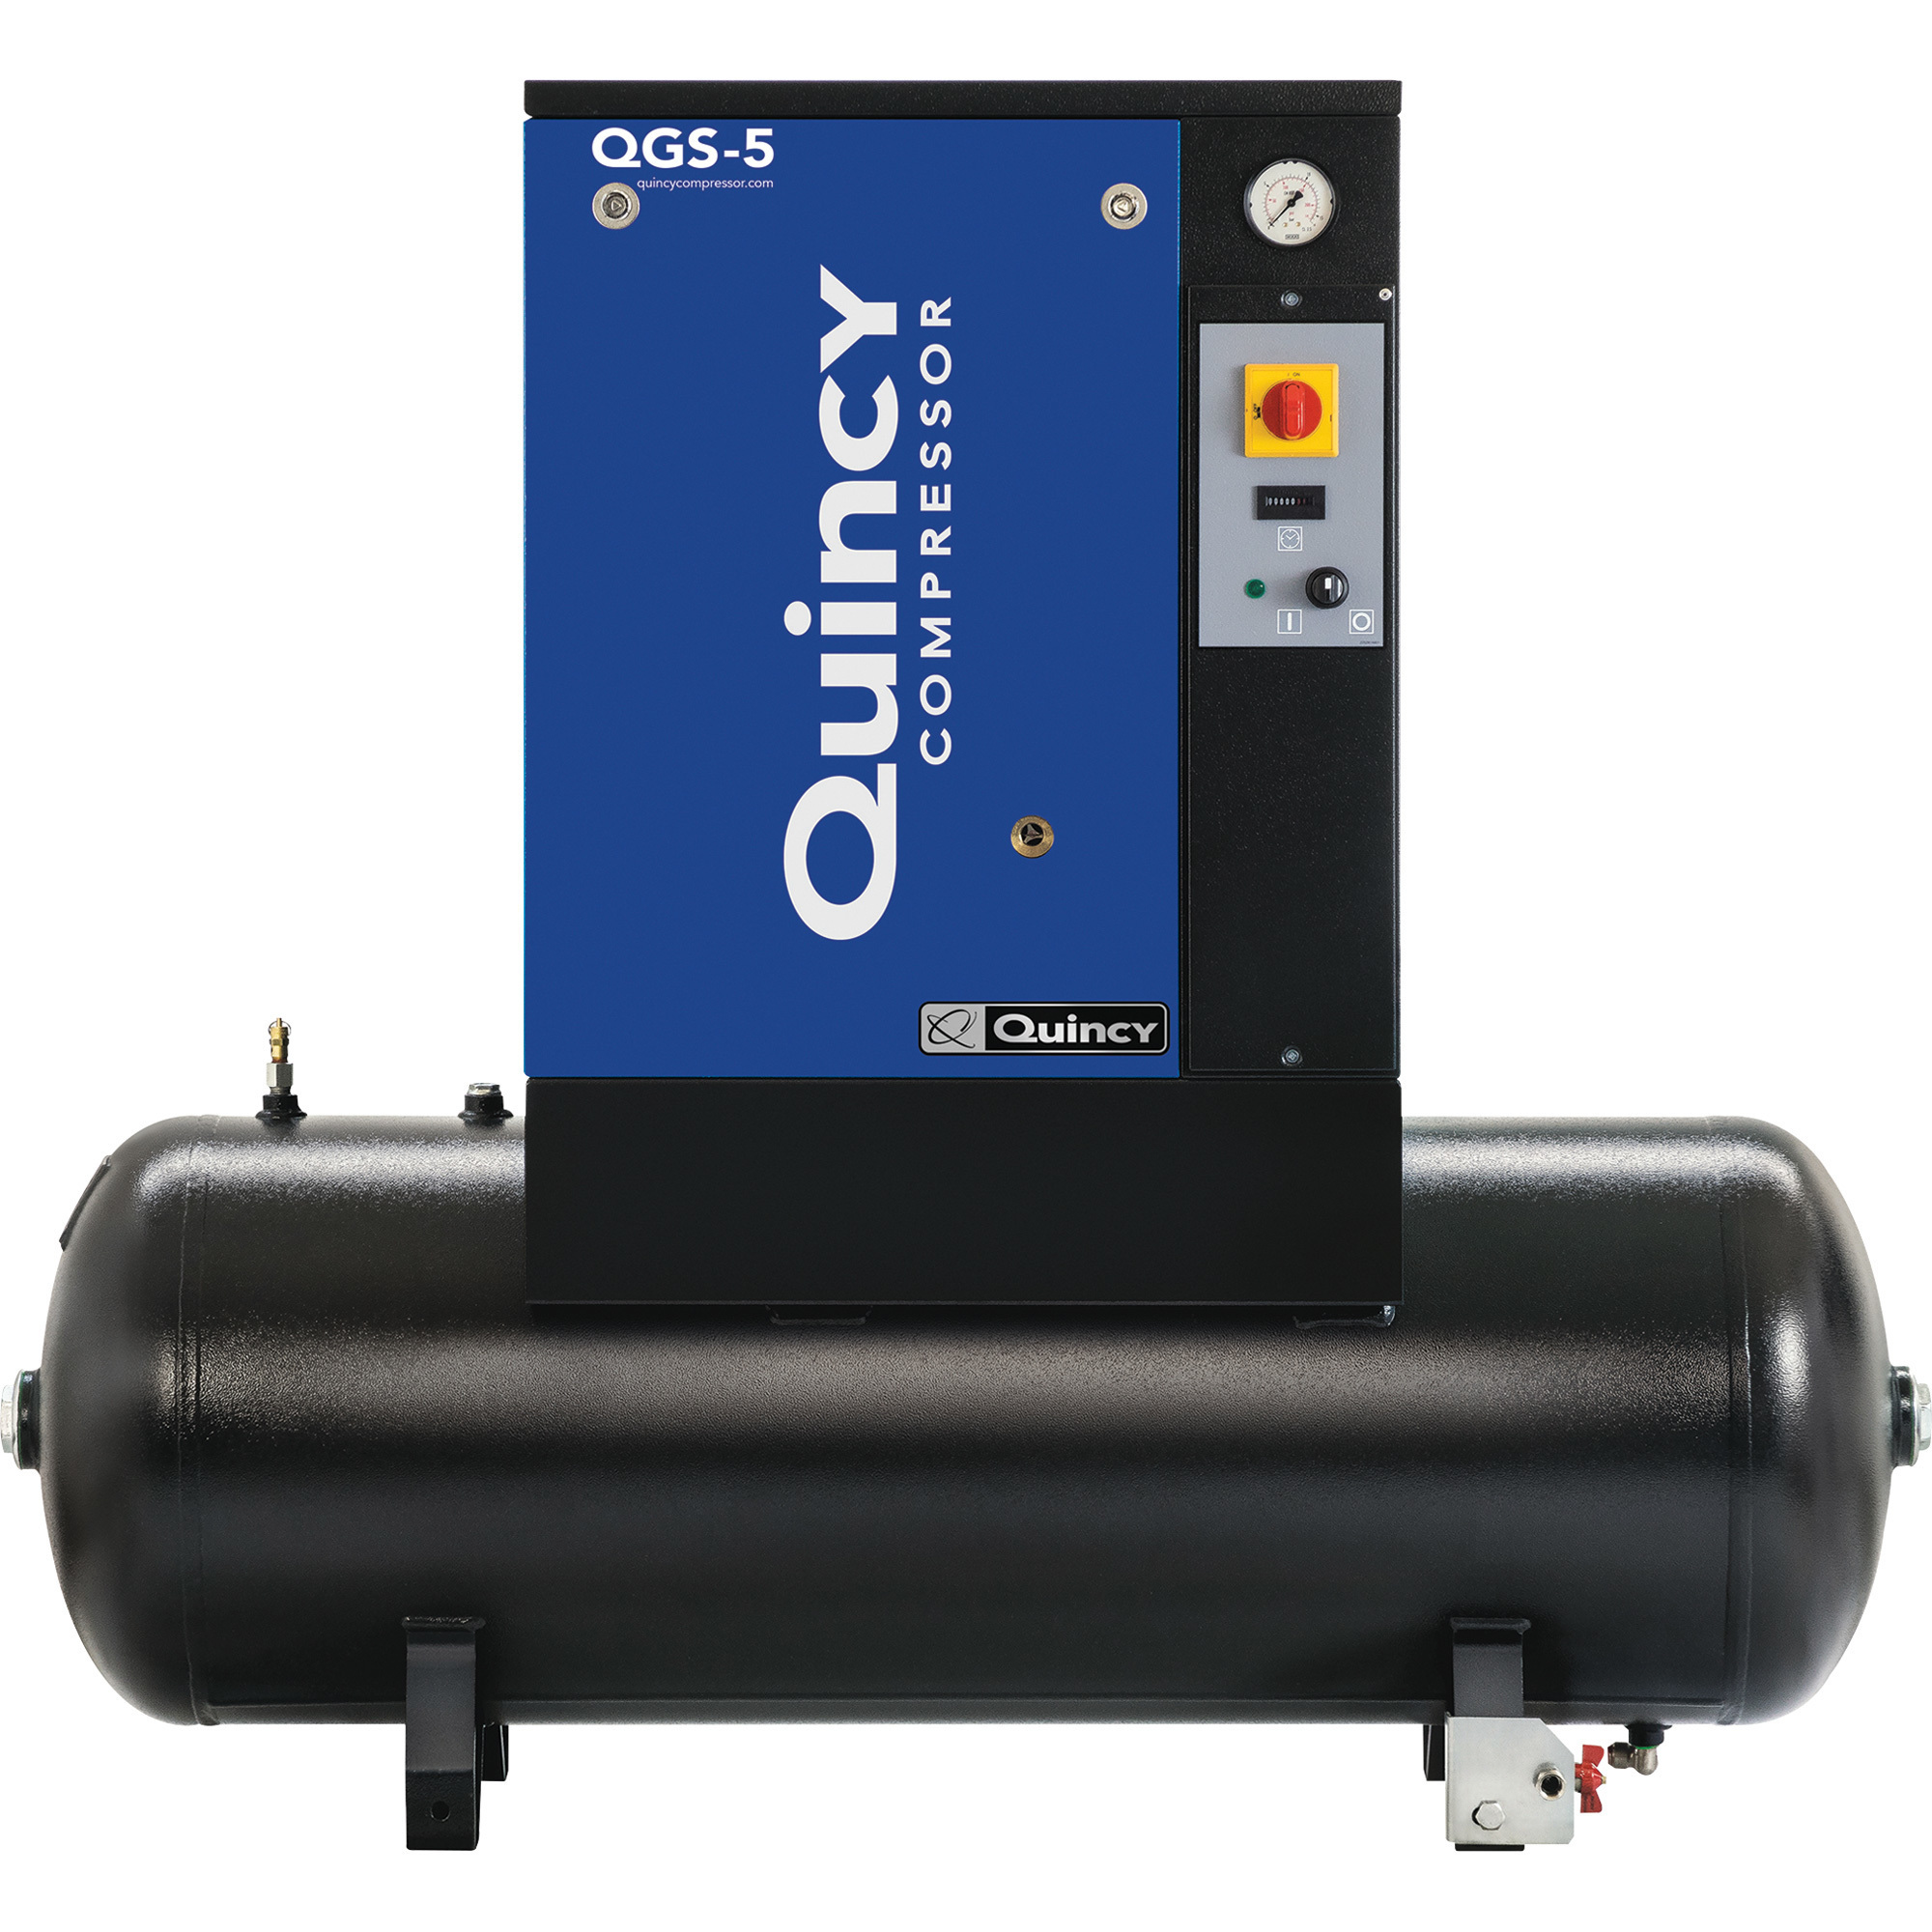 Quincy QGS Rotary Screw Air Compressor, 5 HP, Tri-Voltage: 200-208V, 230V, 460V, 3-Phase, 60-Gallon Horizontal, Model 4152051913